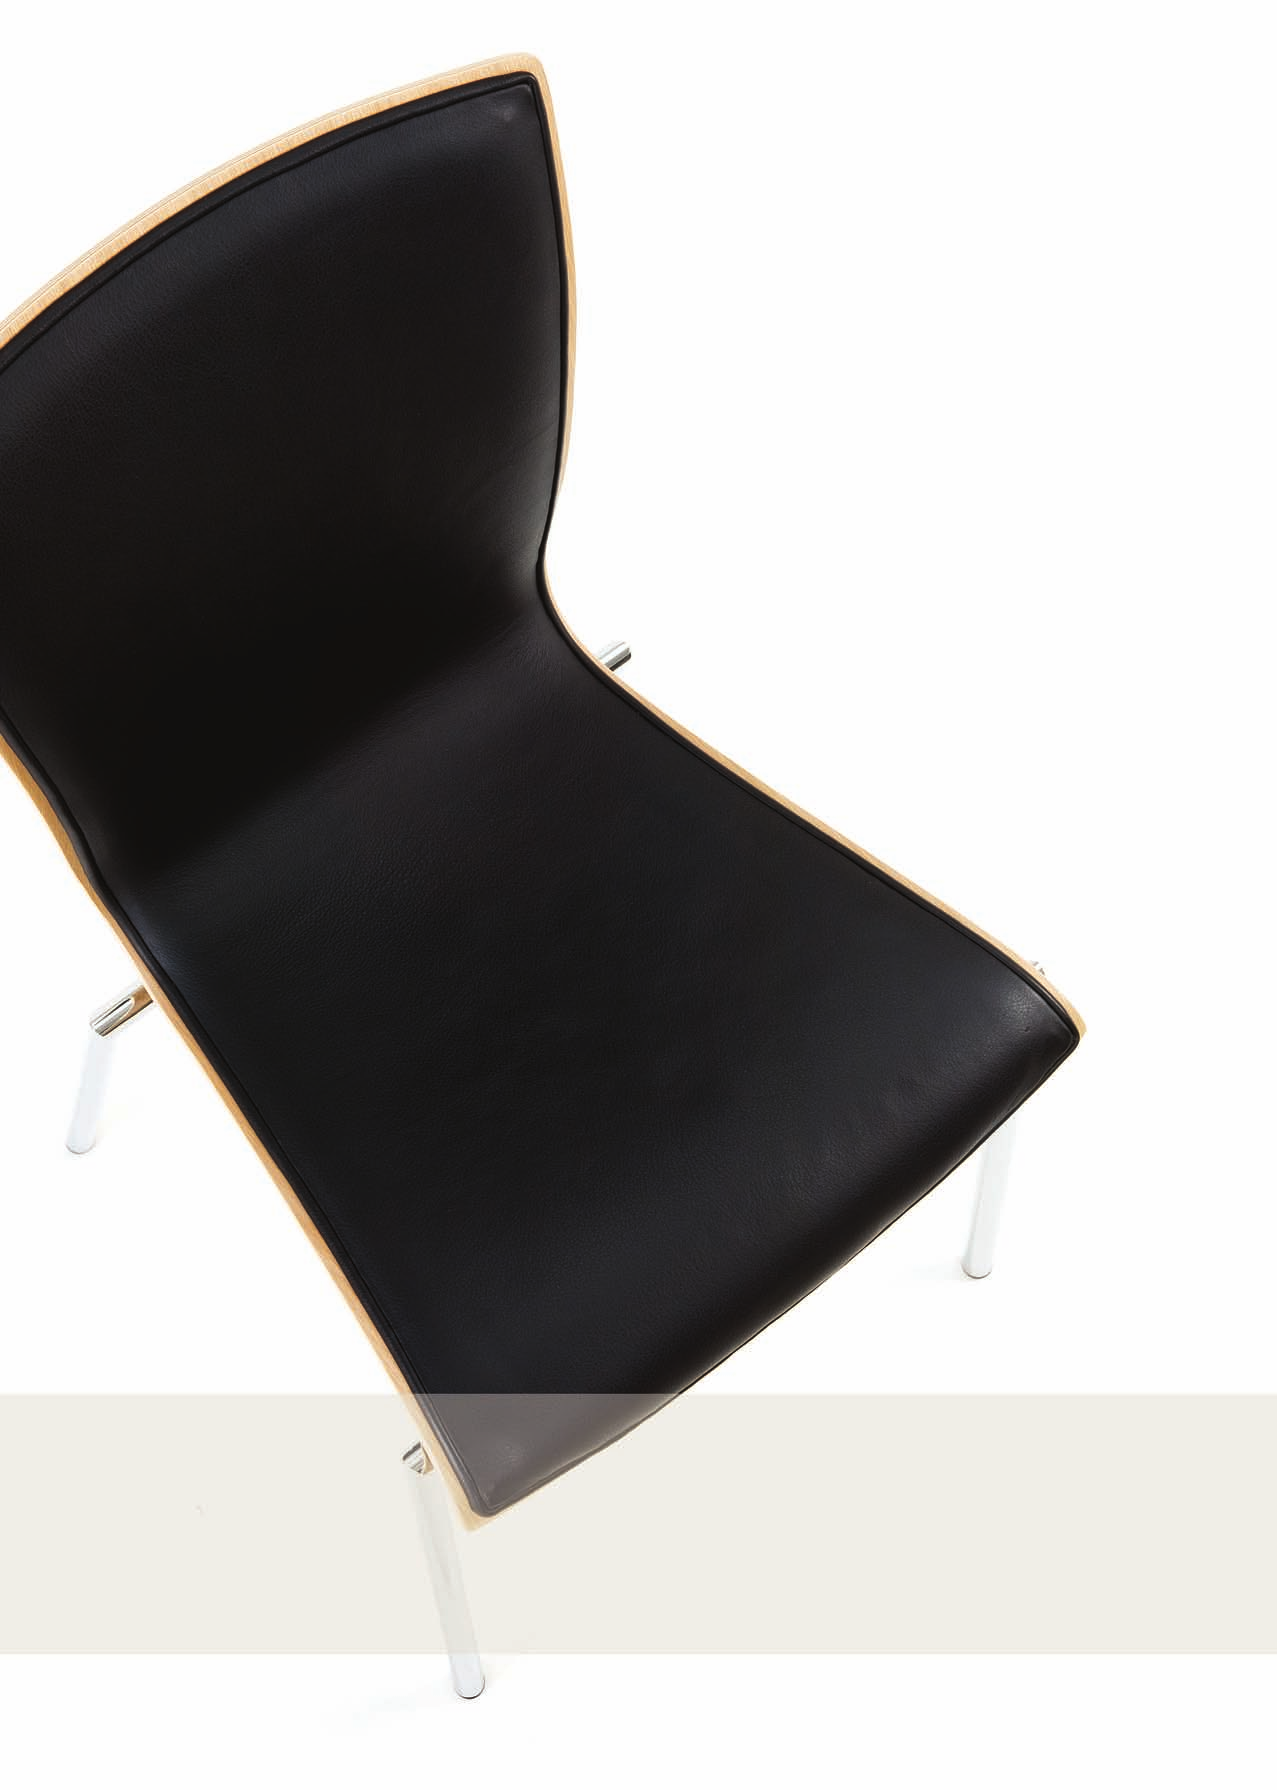 IDA stol/chair/stuhl Høyde/Height/Höhe: 865 mm Sittehøyde/Height seat/sitzhöhe: 430 mm Sittedybde/Depth seat/sitztiefe: 430 mm Dybde/Depth/Tiefe: 515 mm Bredde/Width/Breite: